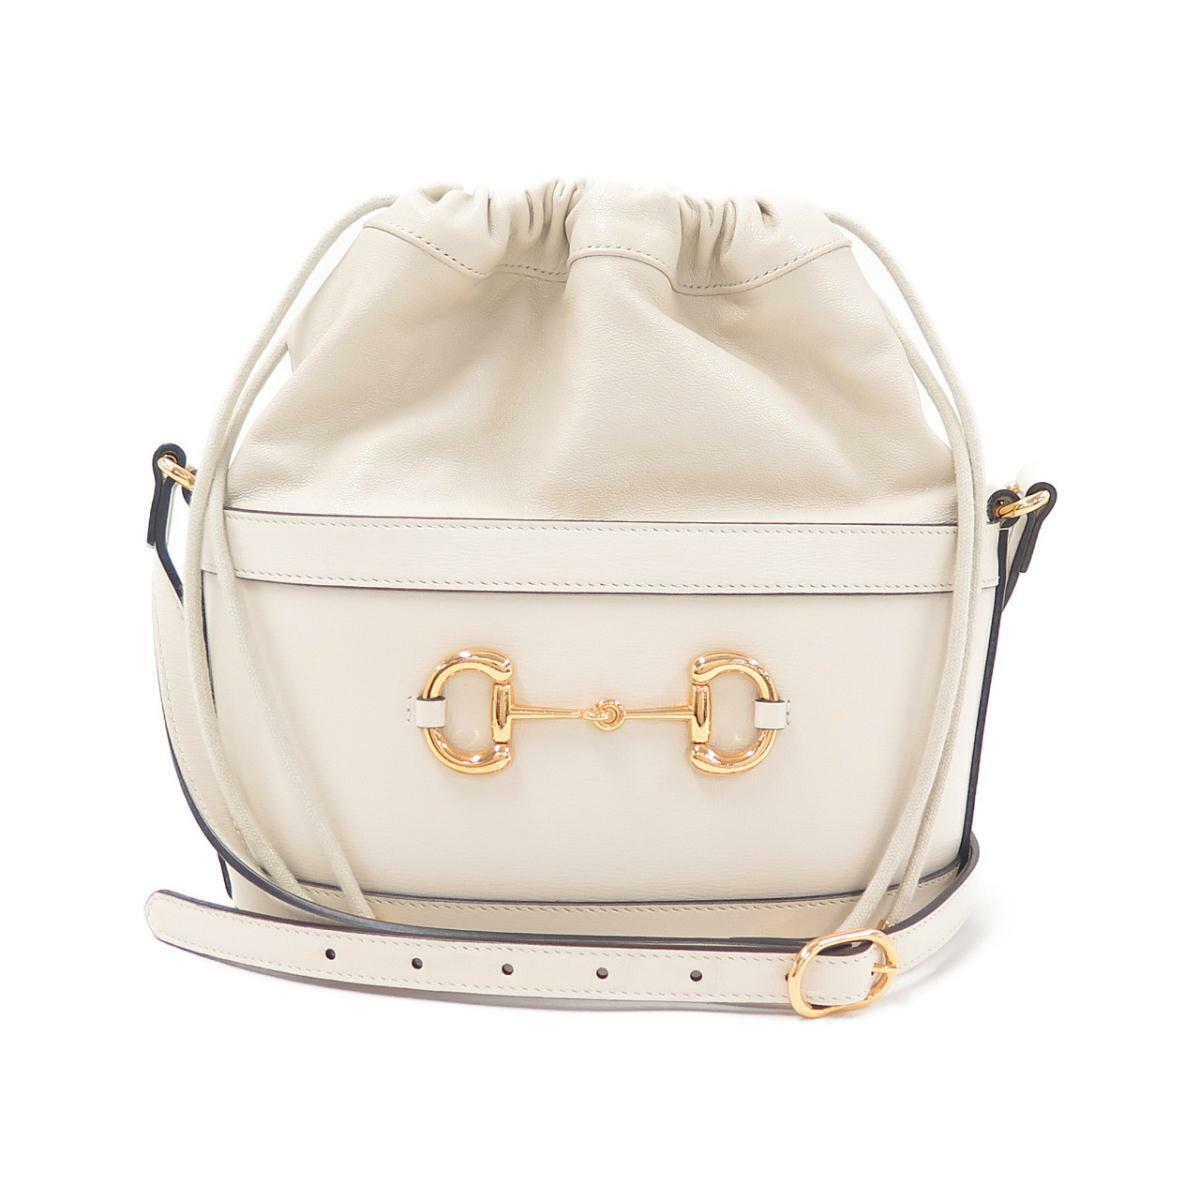 Gucci 1955 Horsebit White Leather Bucket Bag - LUXURYMRKT